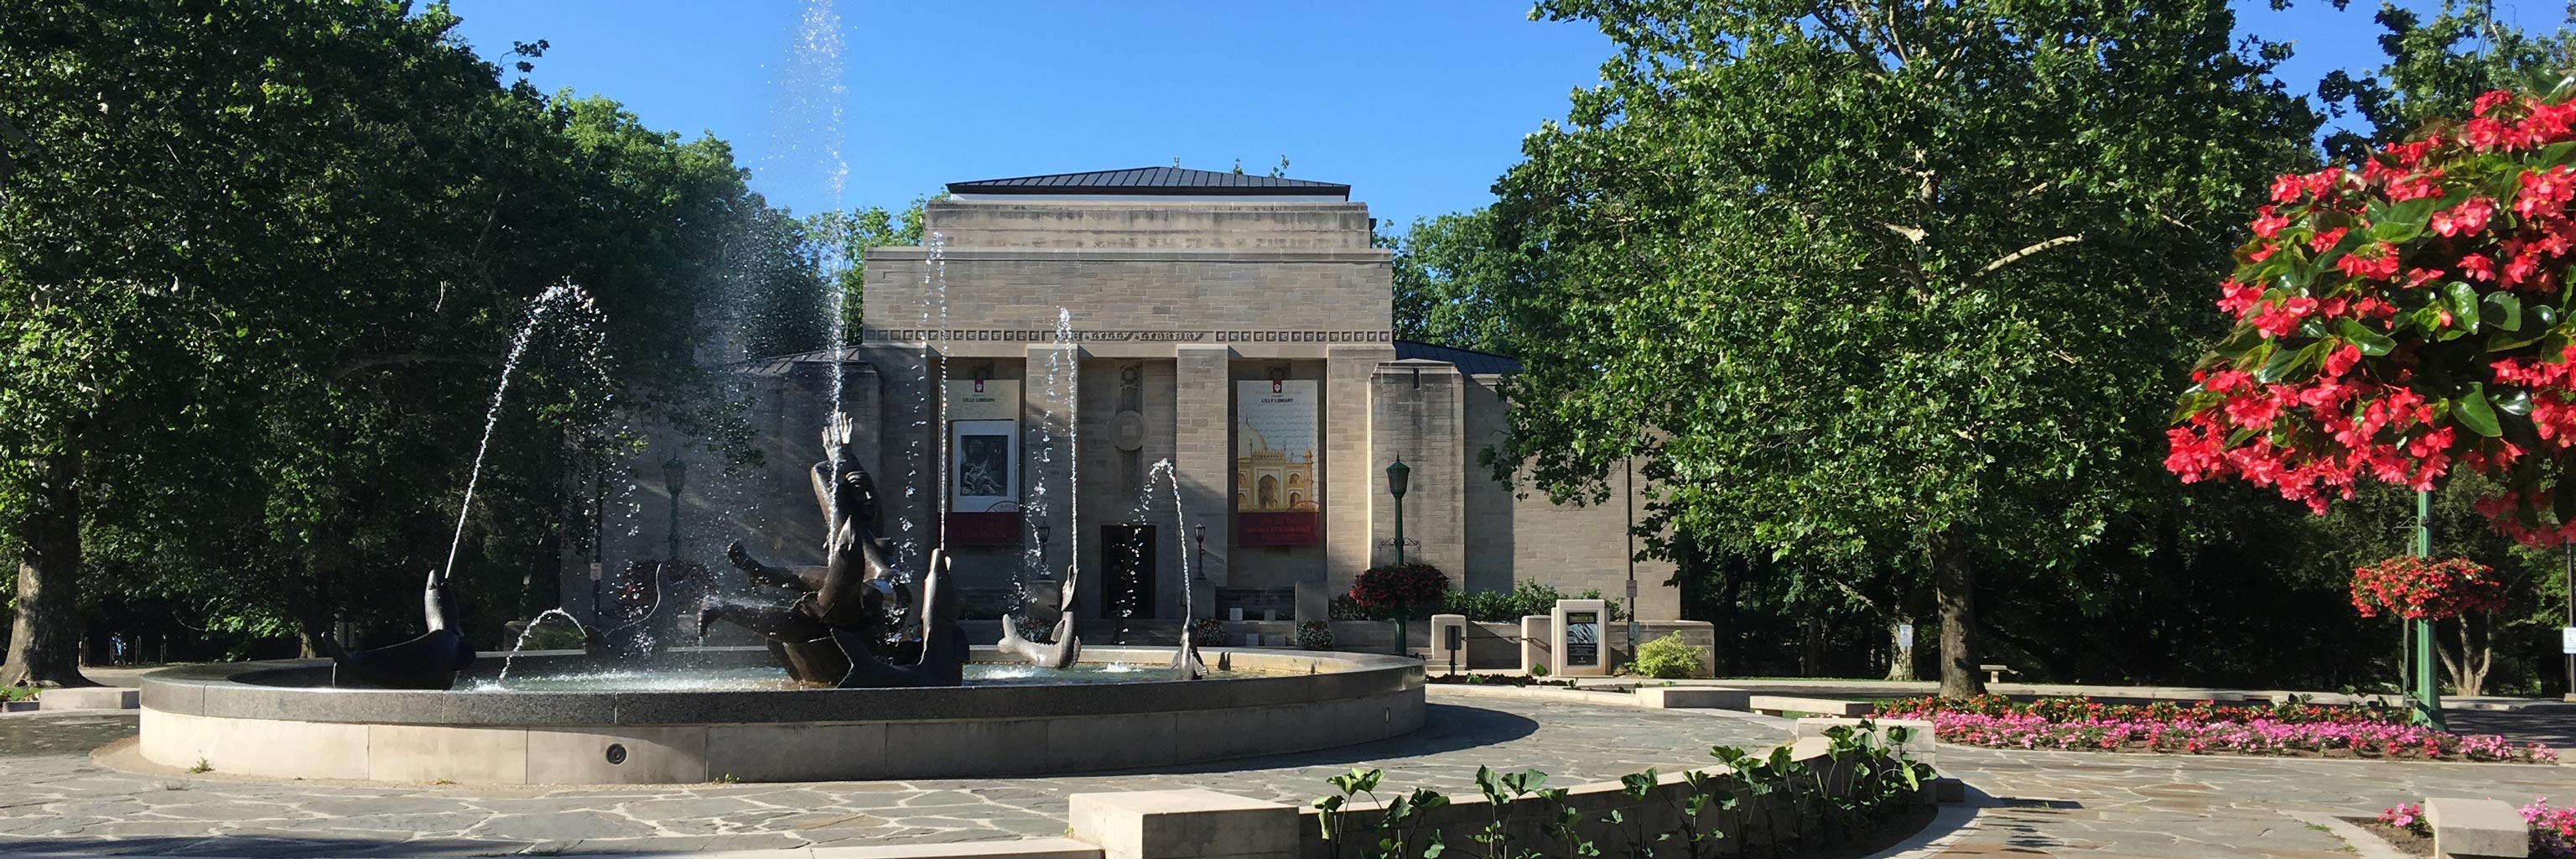 Showalter Fountain on the Indiana University Bloomington campus.